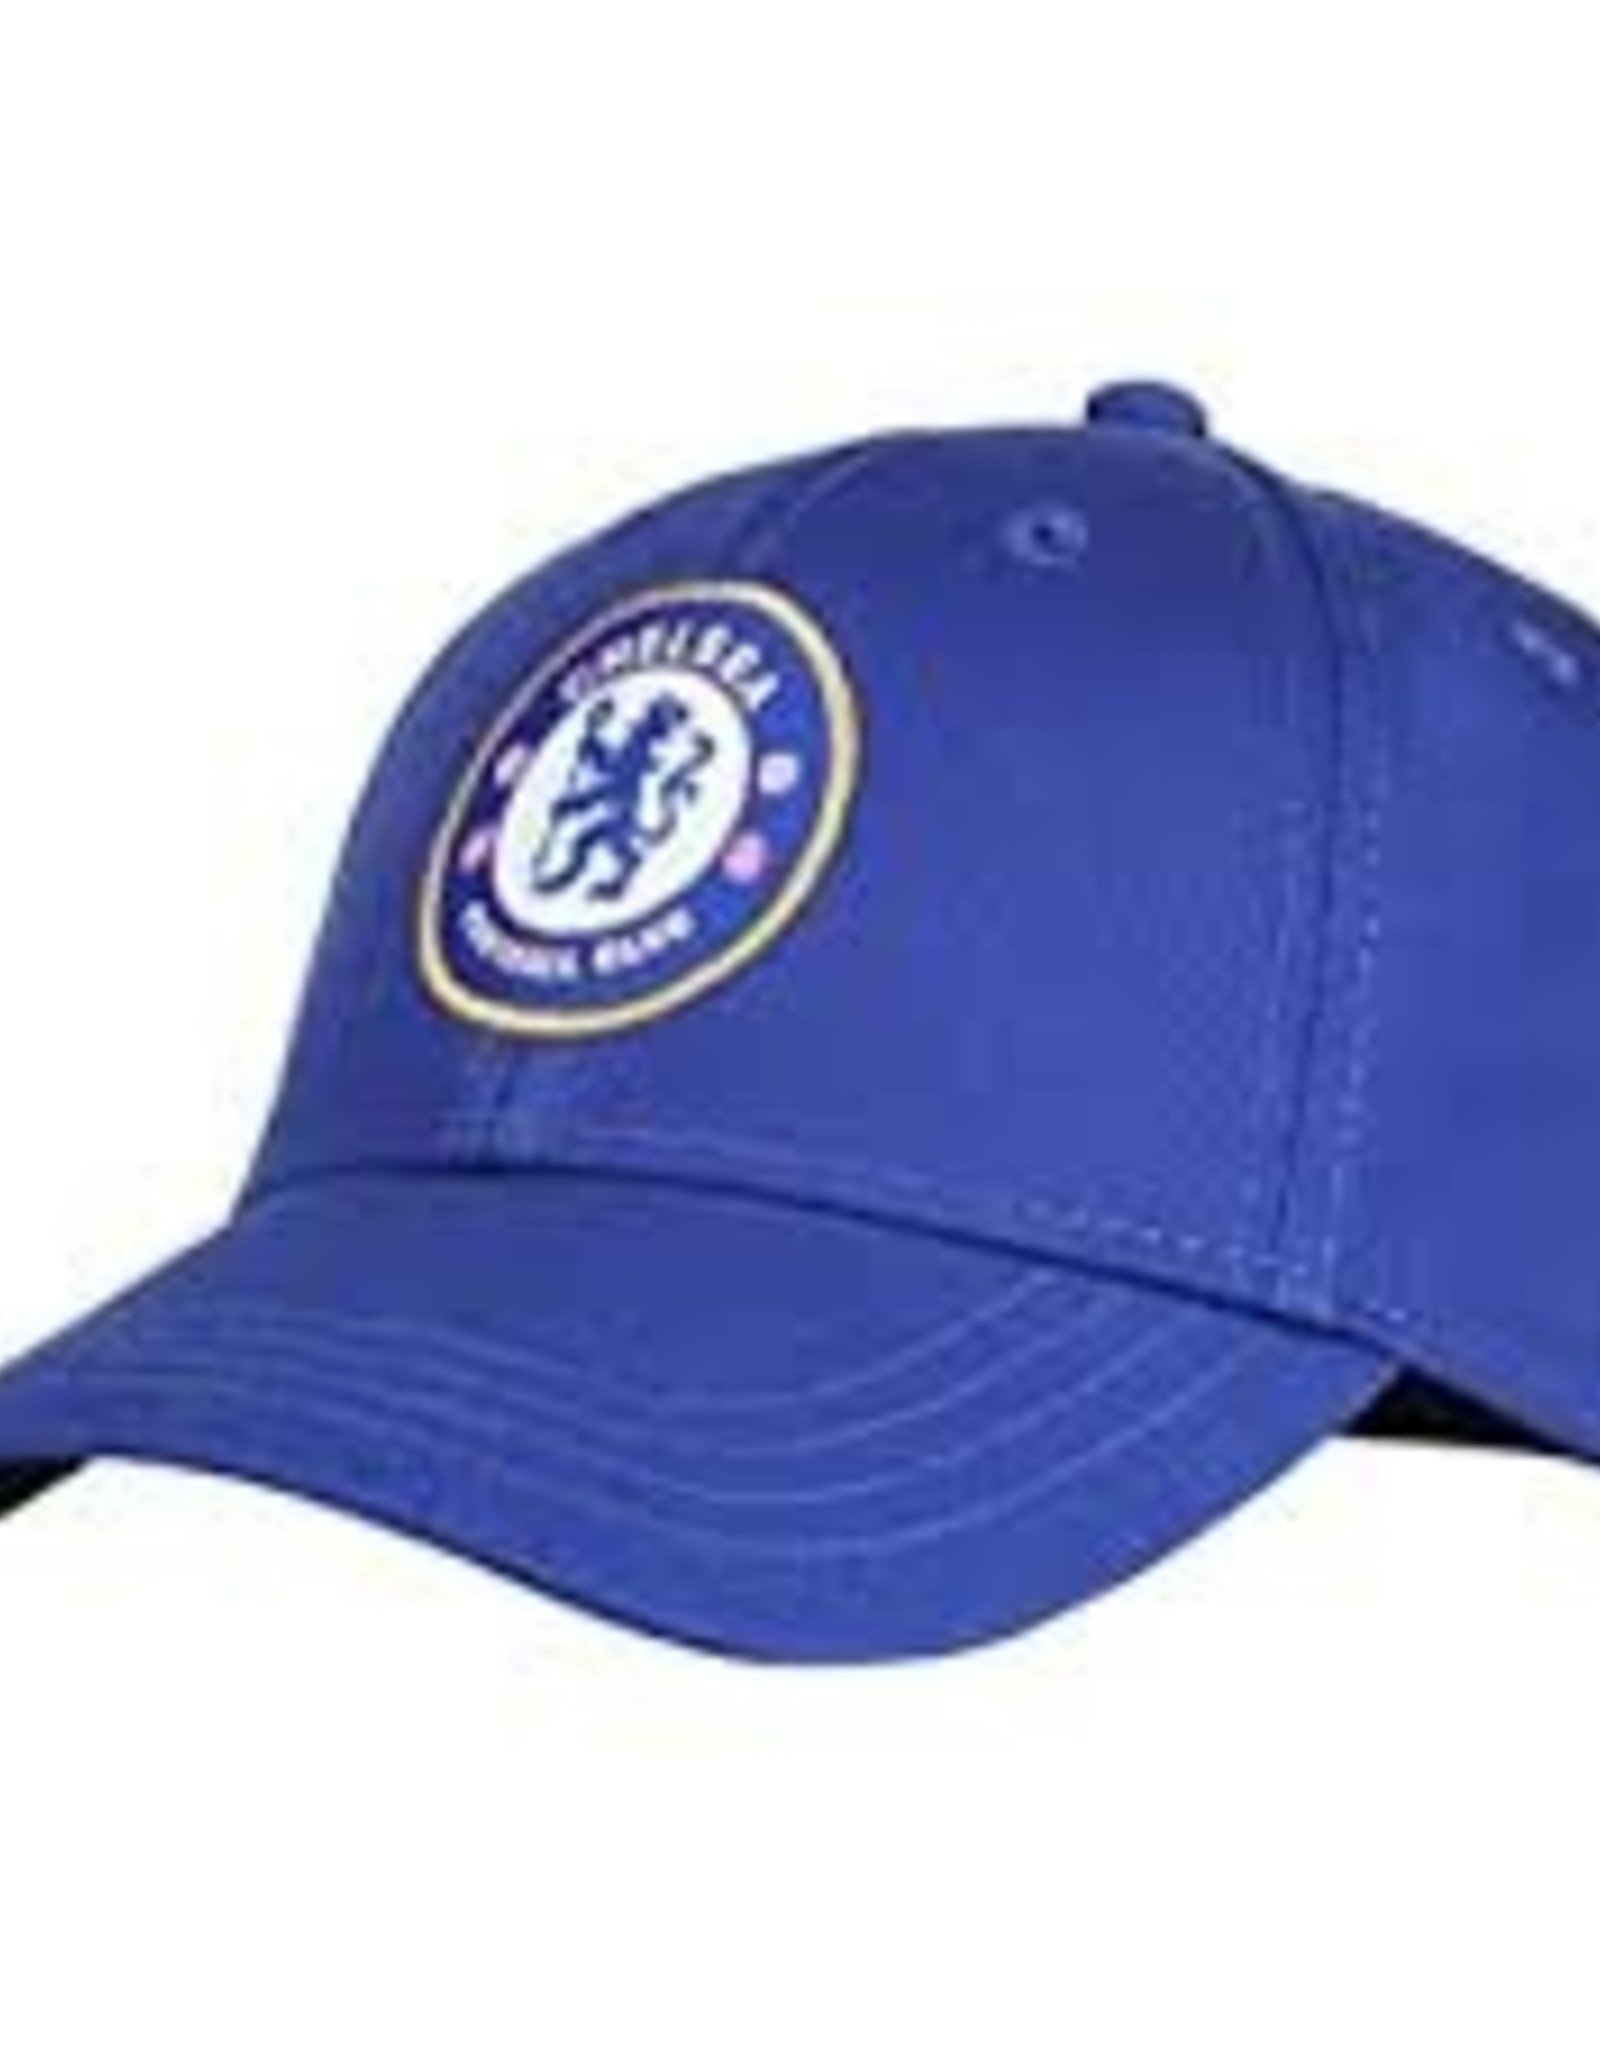 Chelsea Royal Crest Hat